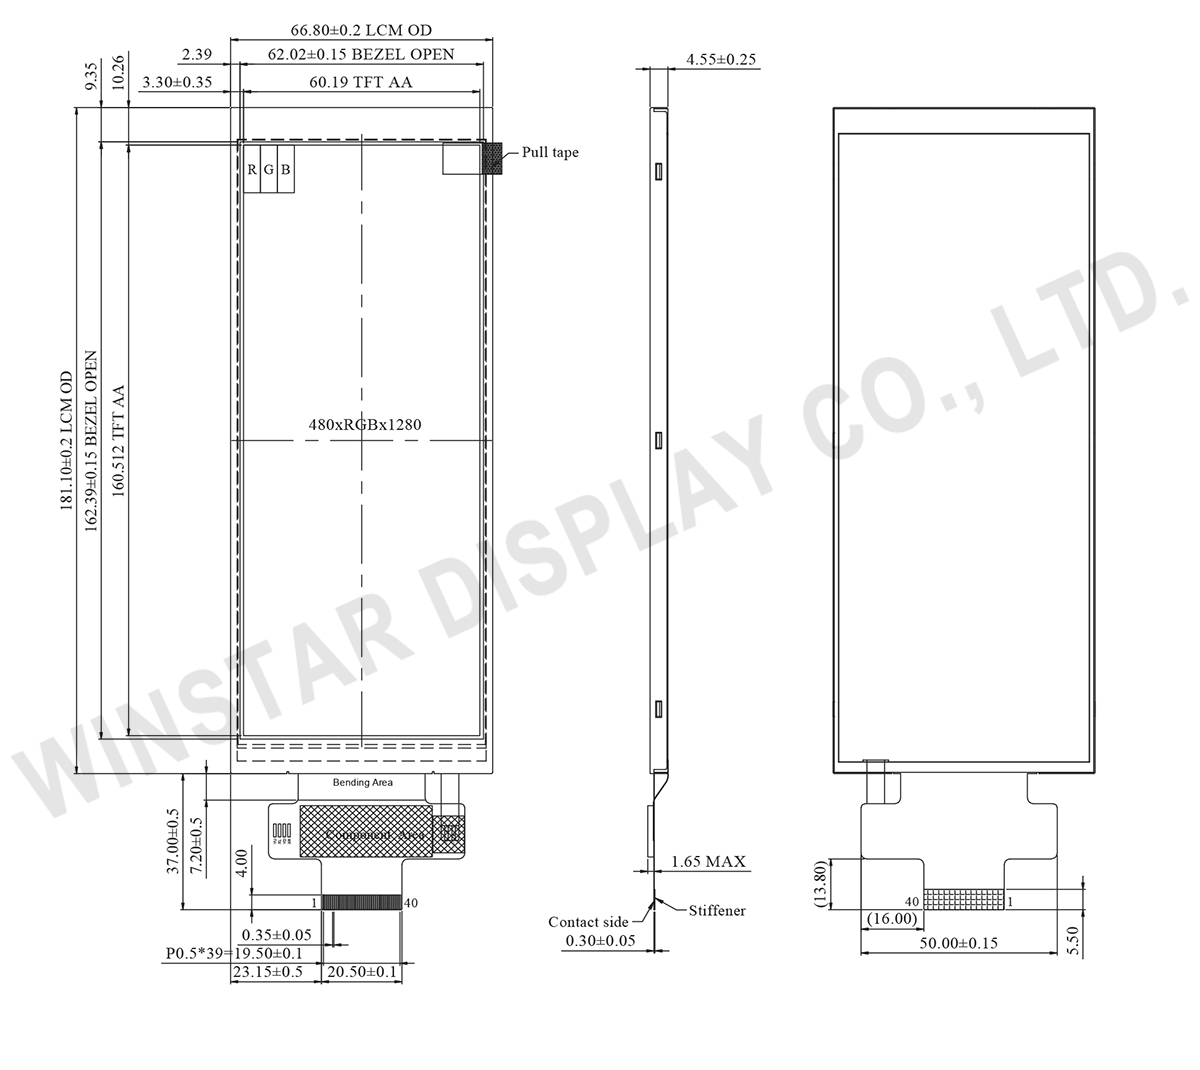 6.75 inch Bar Type TFT LCD Display 480x1280 LVDS Interface - WF0675ATYAB6LNN0